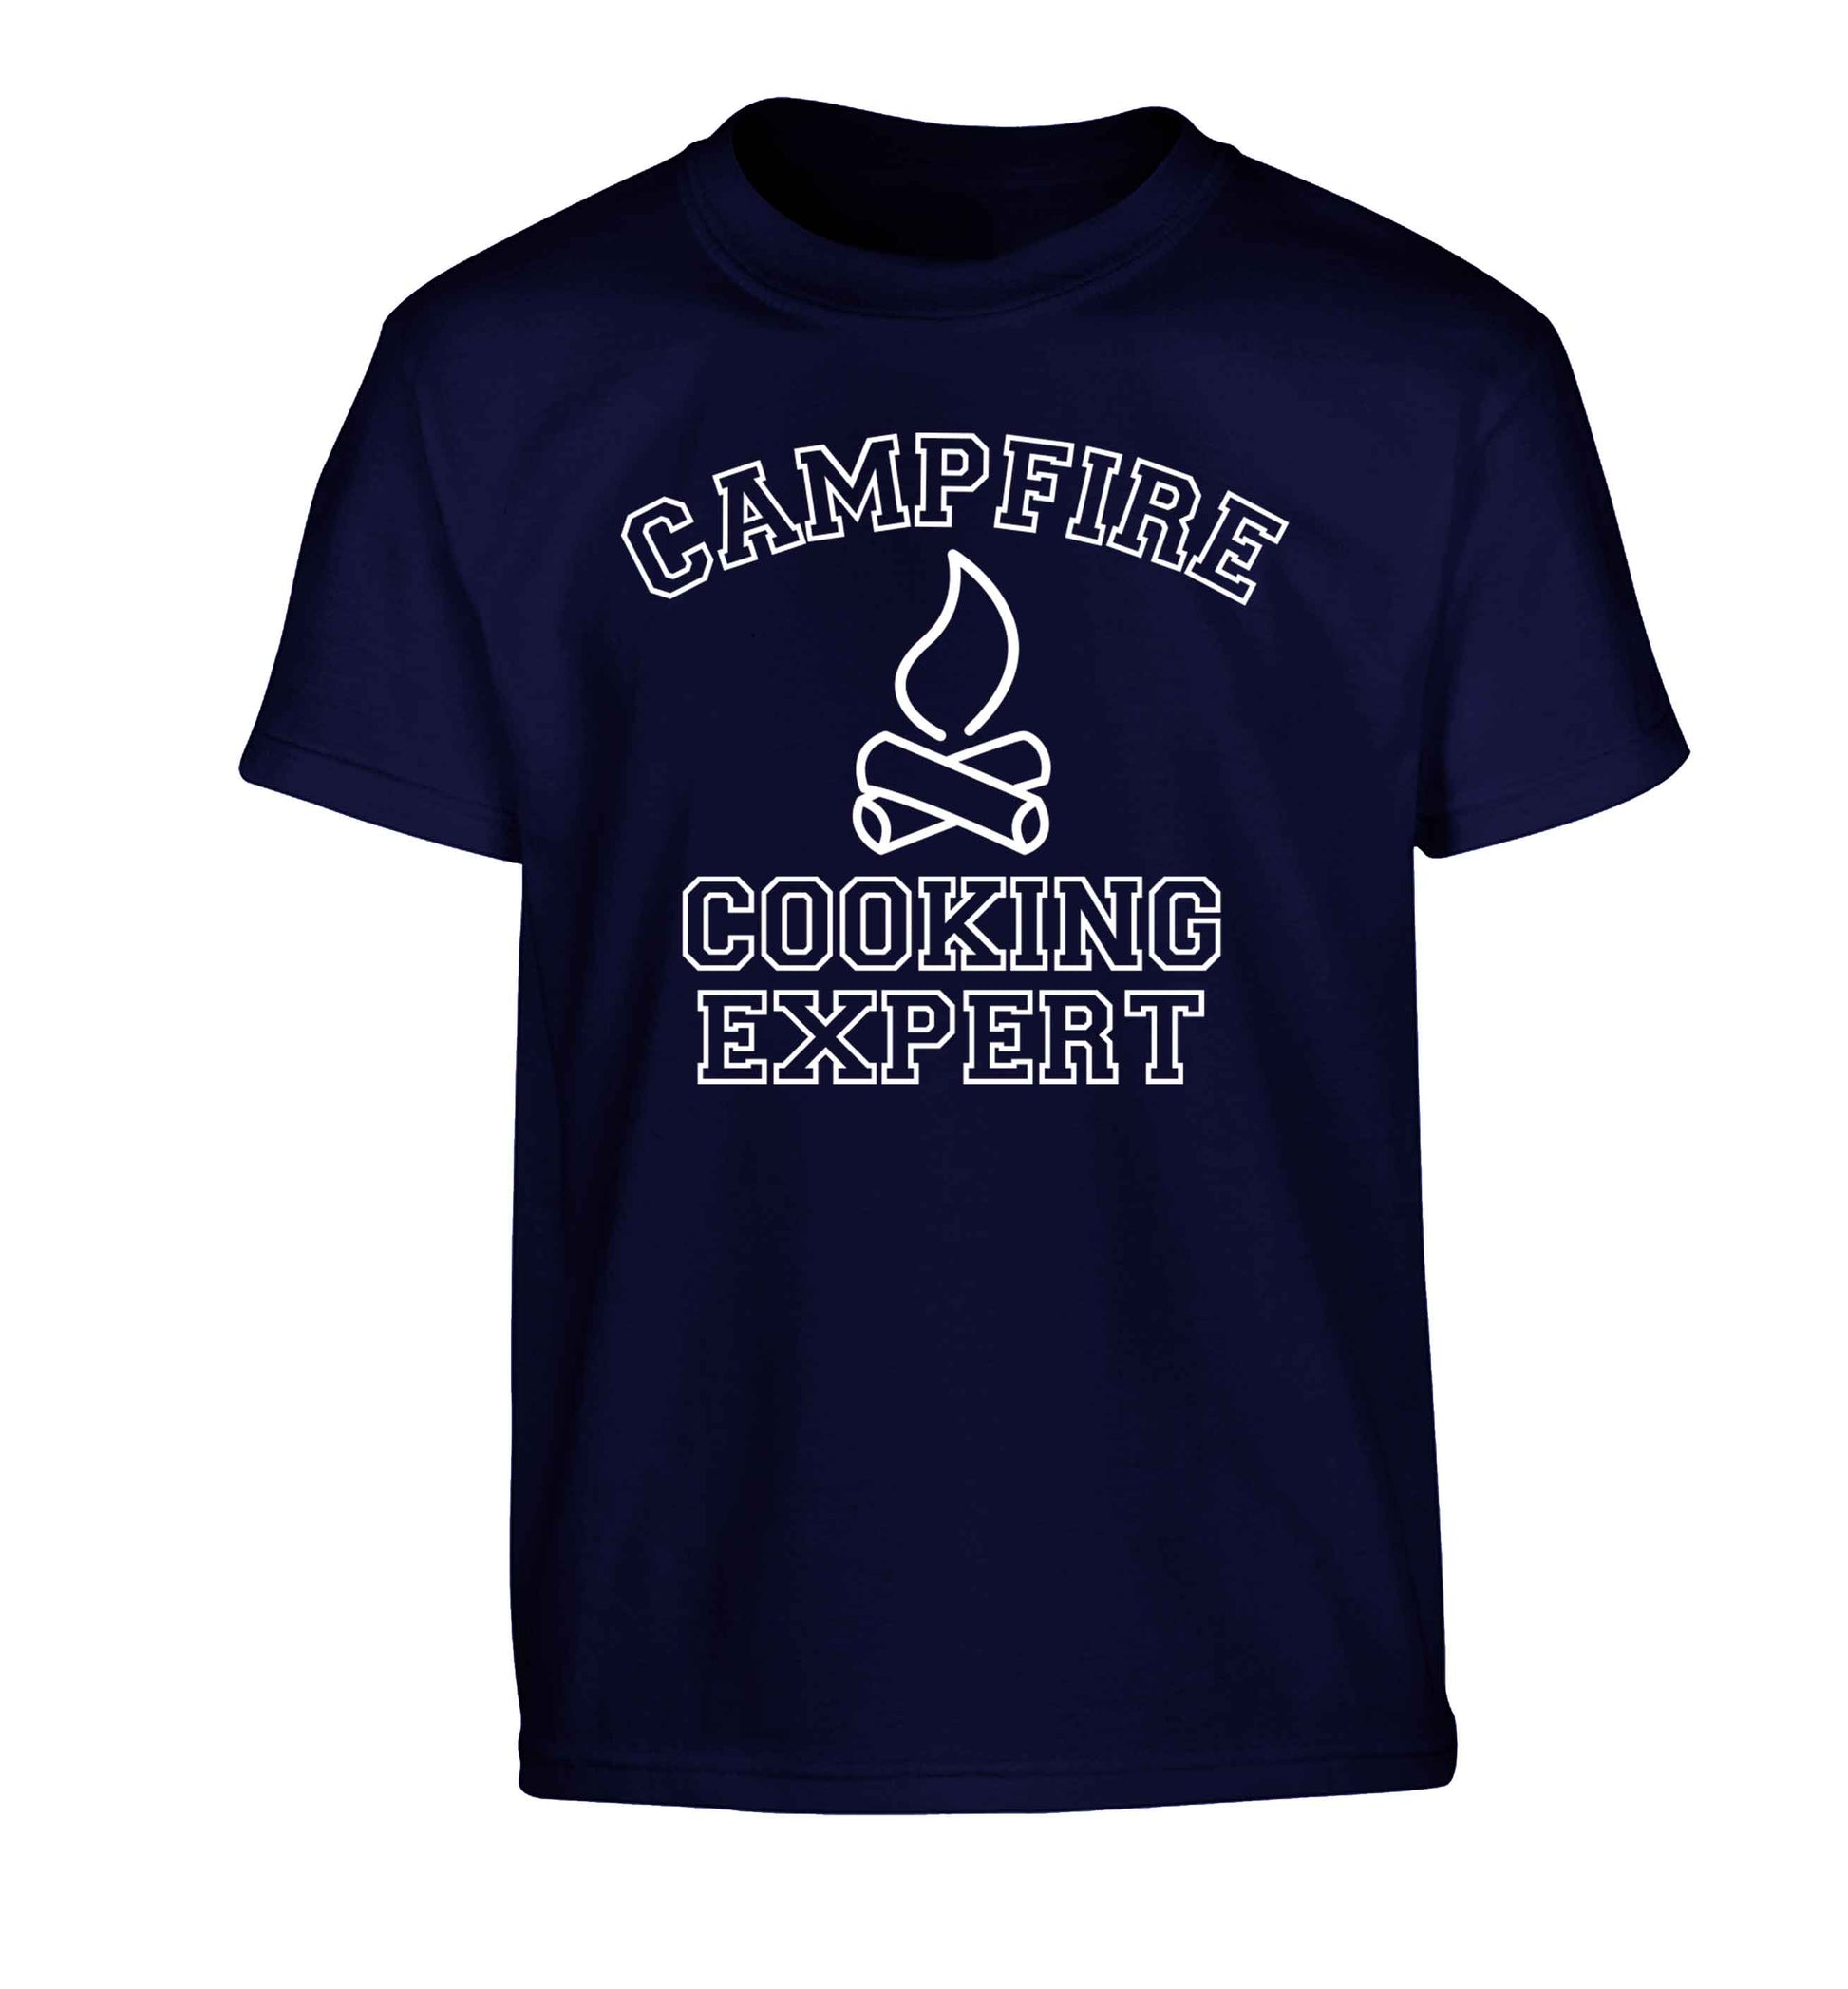 Campfire cooking expert Children's navy Tshirt 12-13 Years